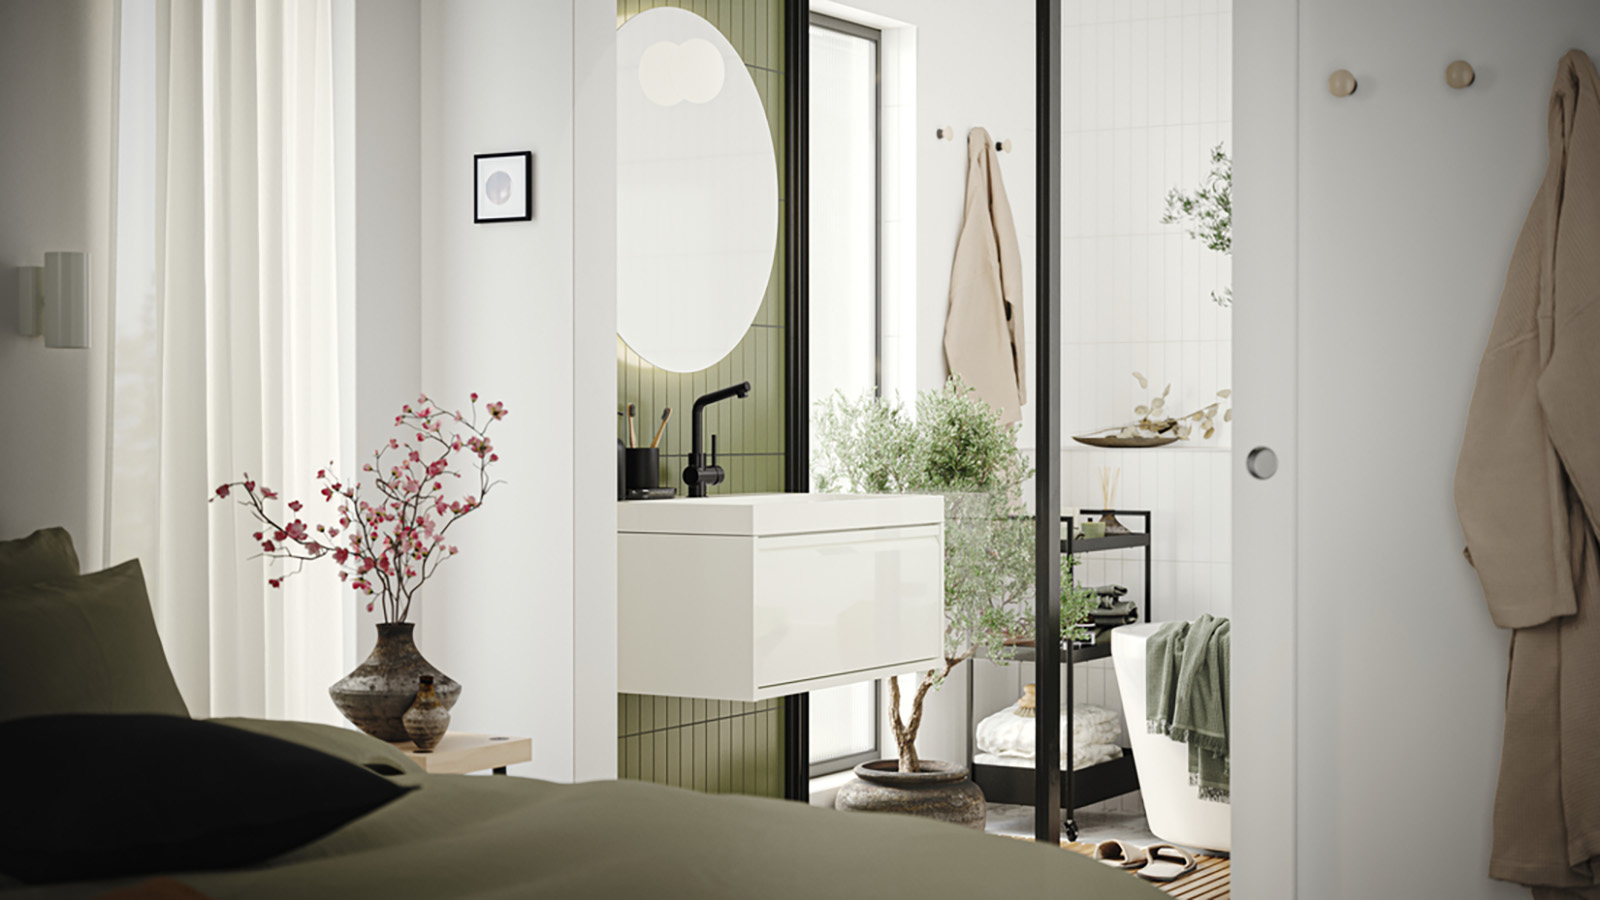 IKEA - Ένα μικρό και οργανωμένο μπάνιο που εμπνέει την χαλάρωση